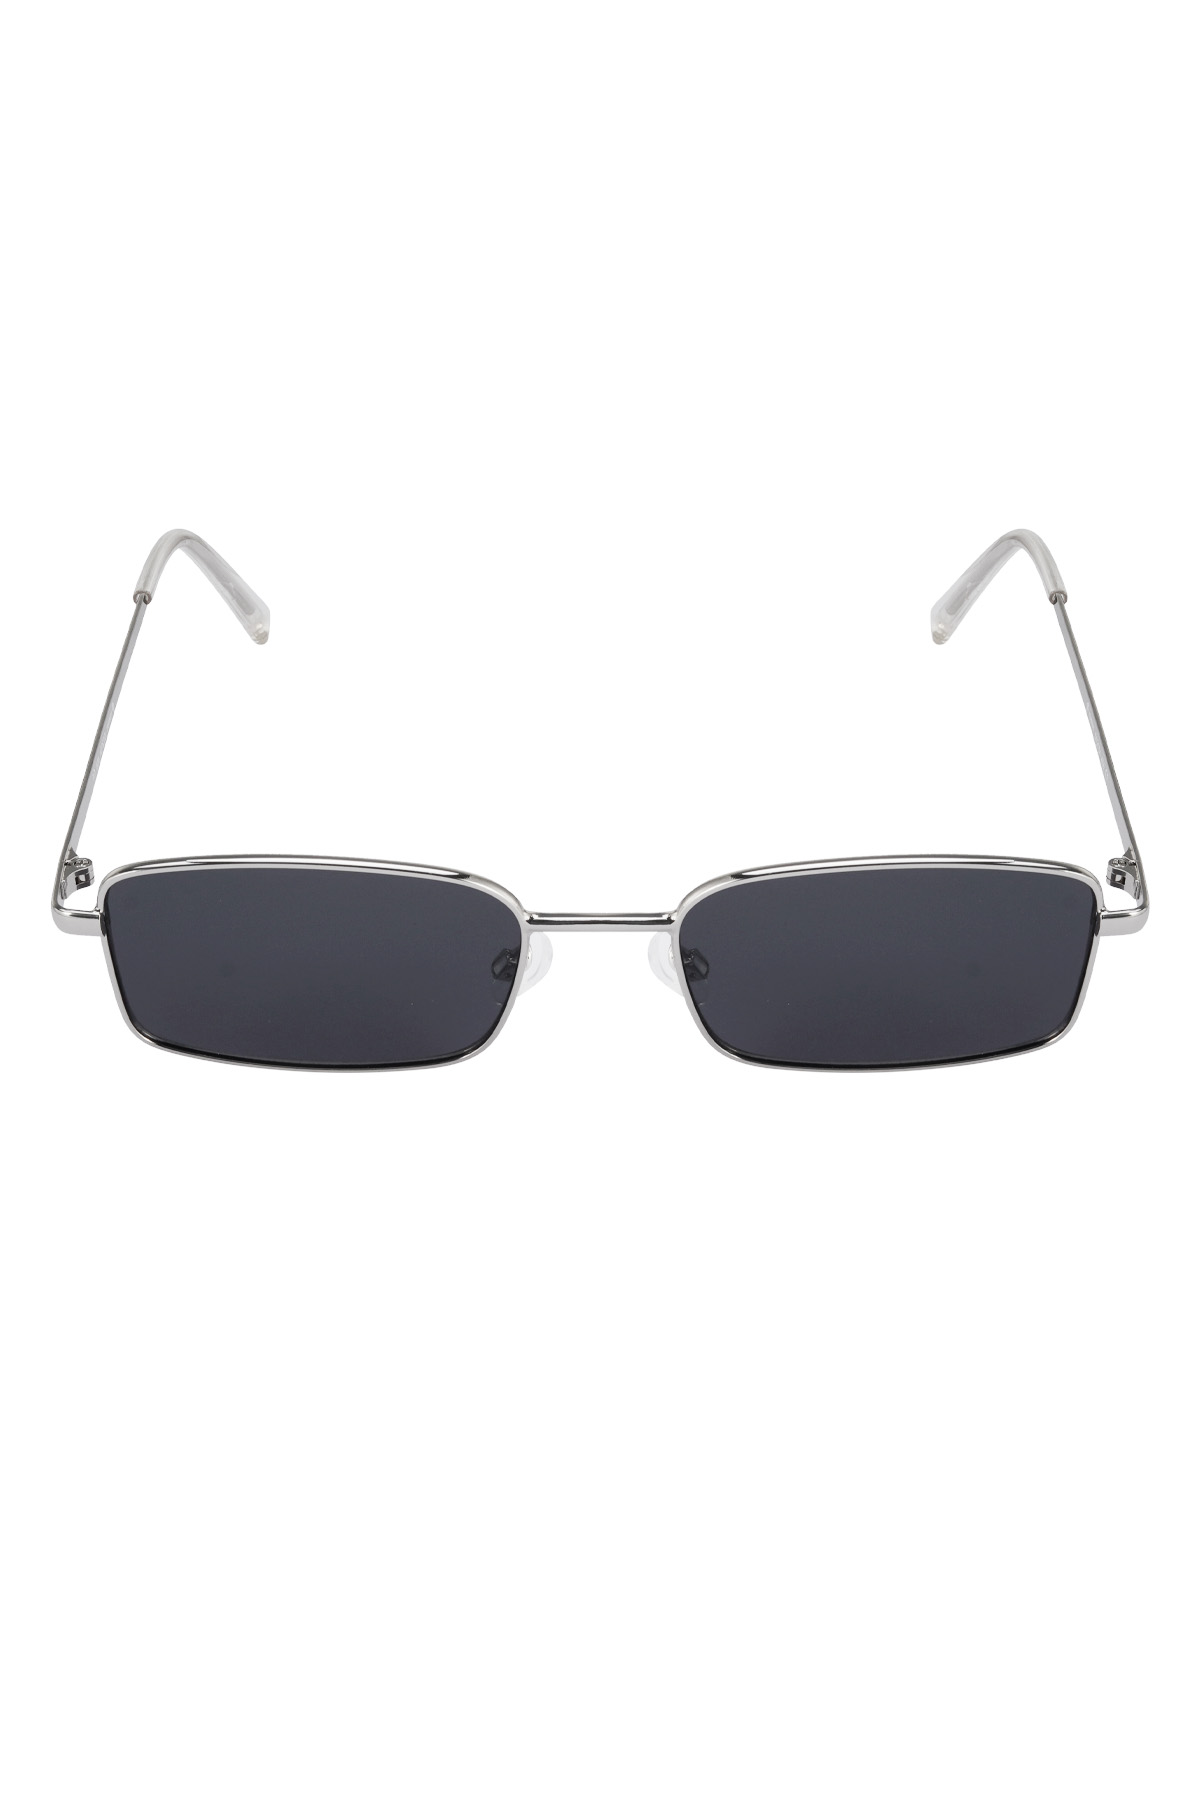 Sunglasses radiant view - dark gray h5 Picture4